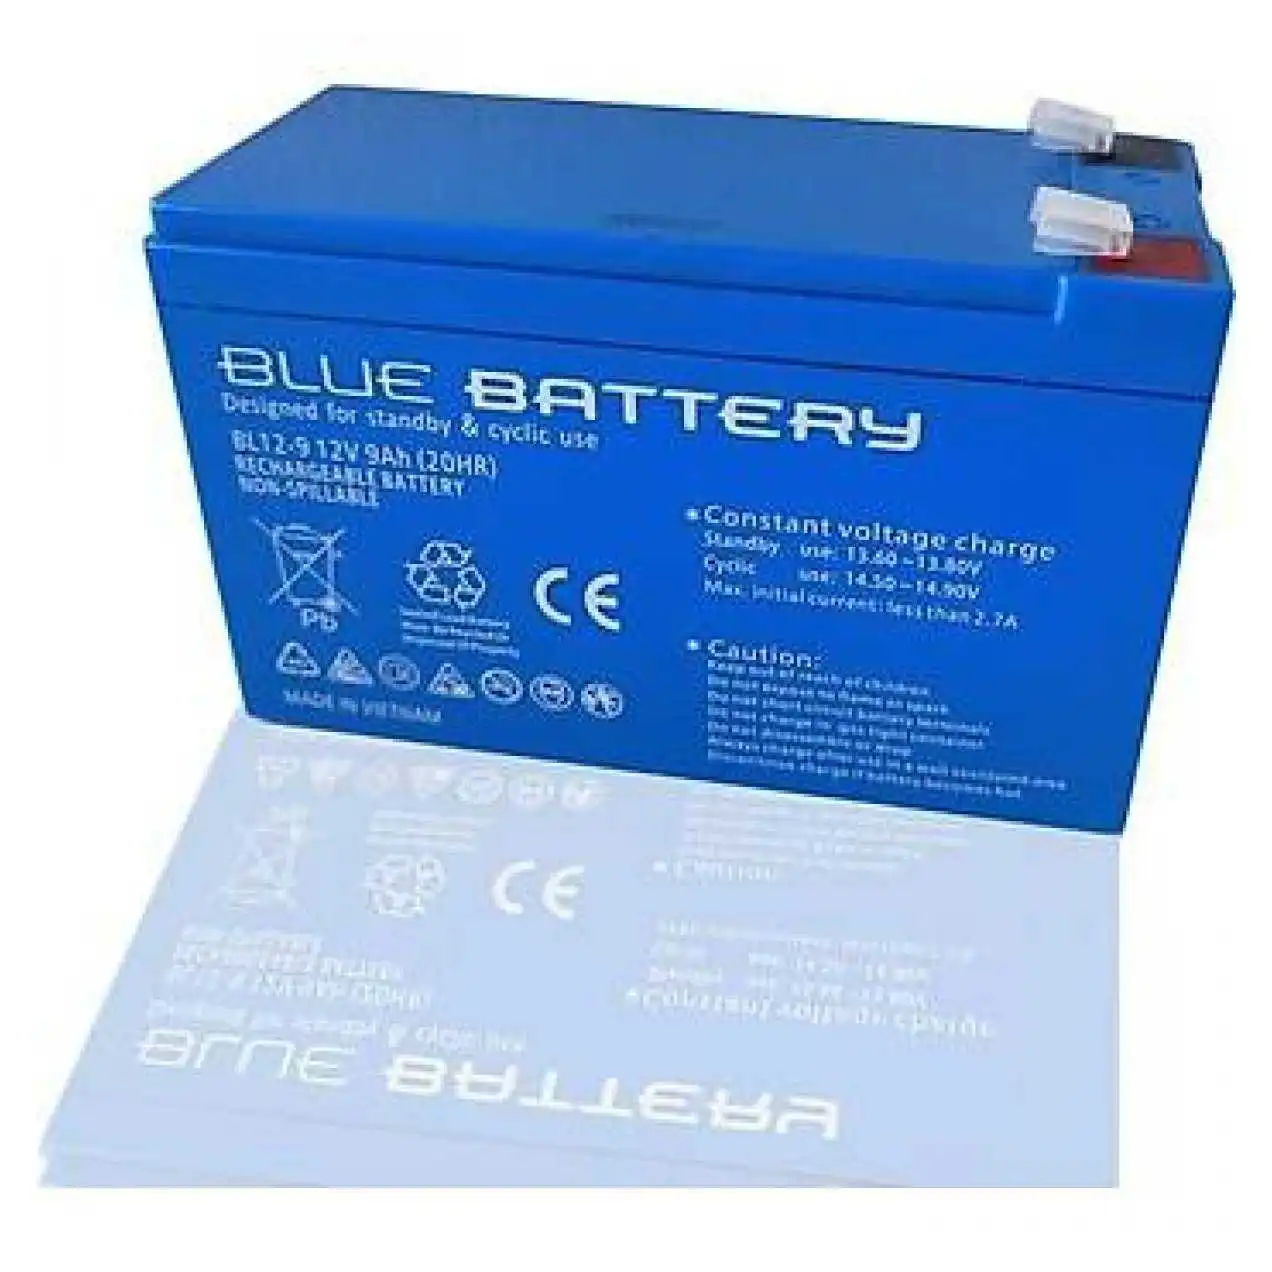 tunmatk-blue-battery-12v-9ah-ups-tpak-tsk18041-ürün-resmi